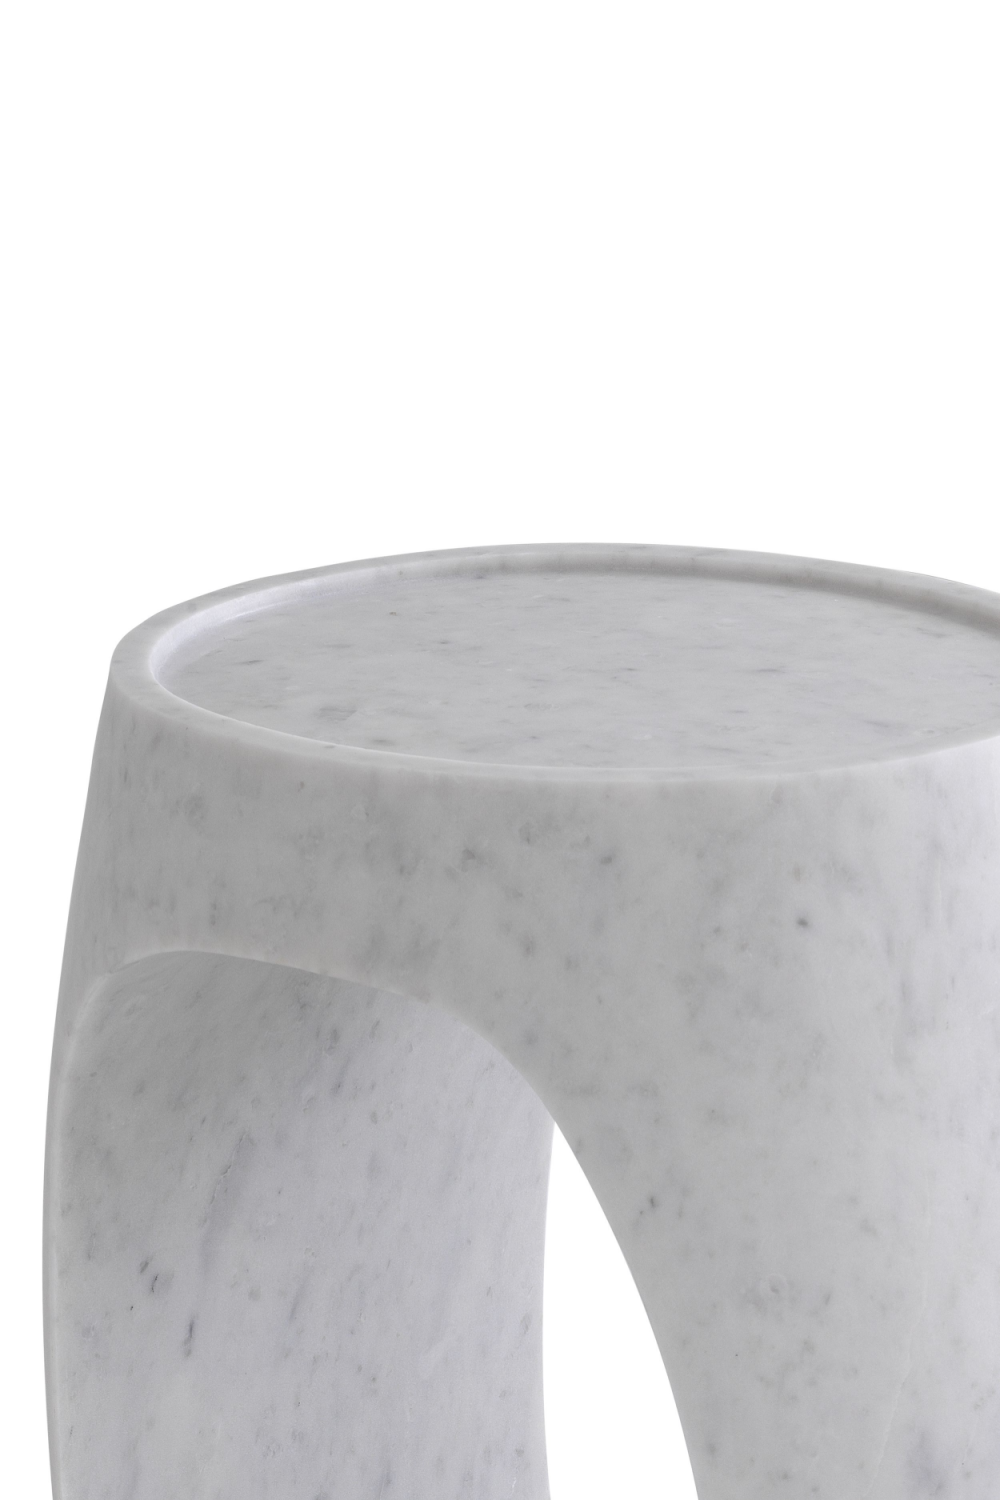 White Marble Round Side Table | Eichholtz Clipper High | OROA.com